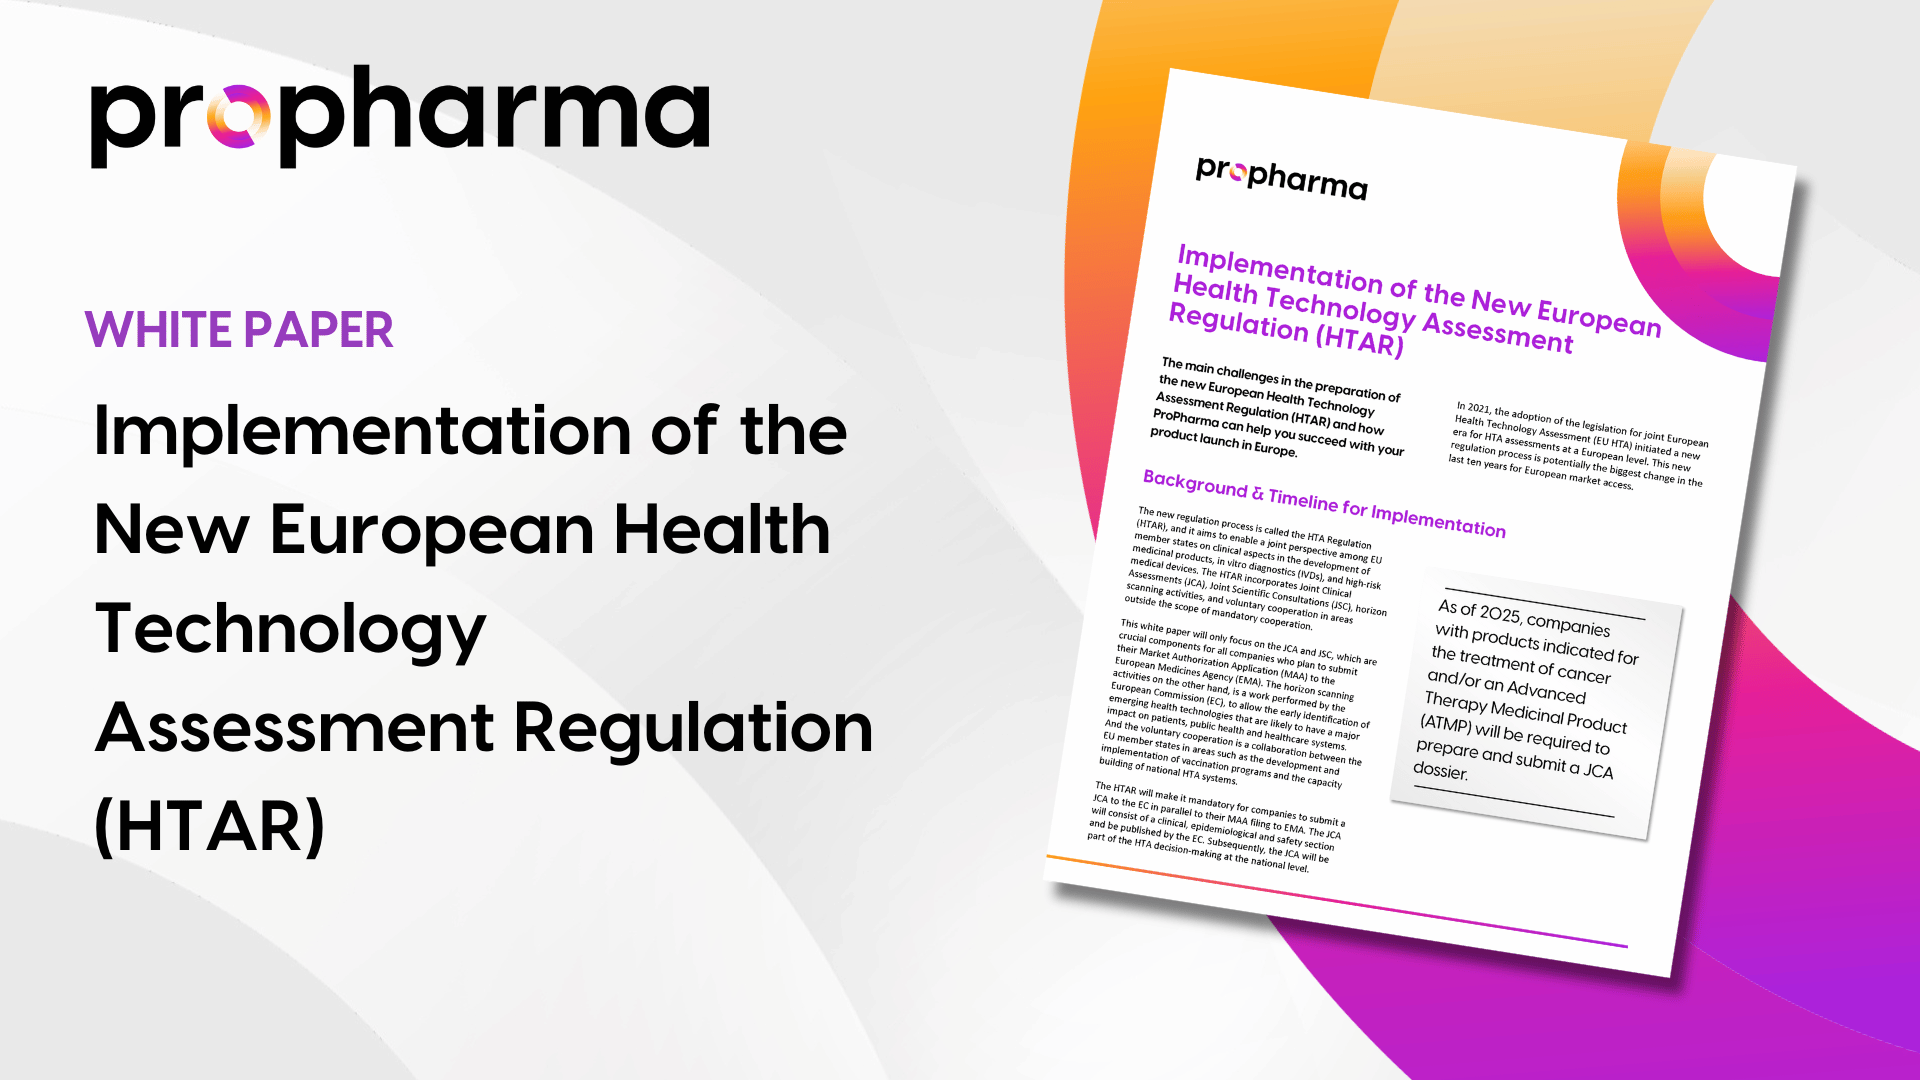 Implementation of the New European Health Technology Assessment Regulation (HTAR) Image